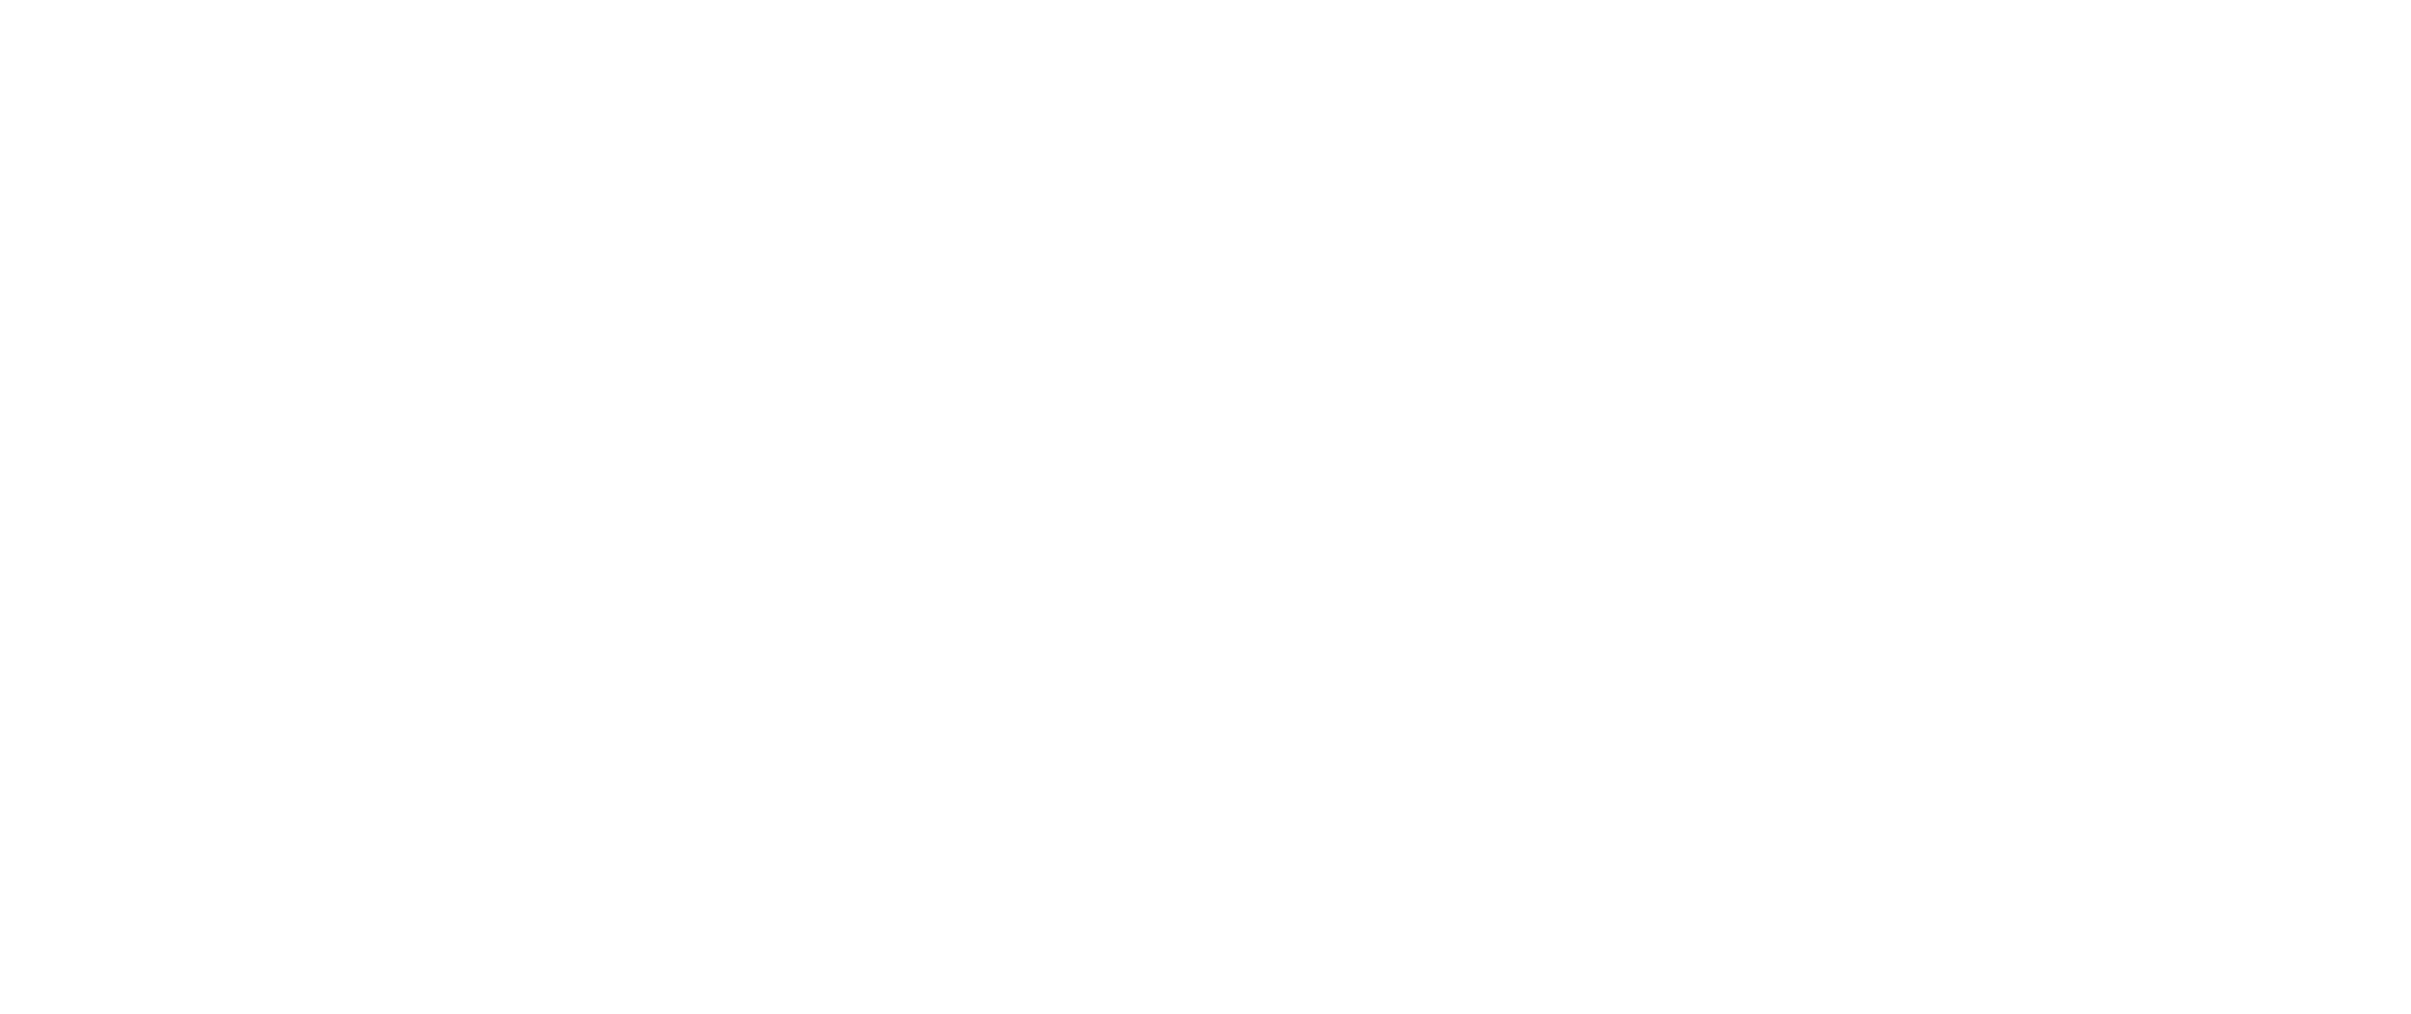 Bolle Logo - Bollé - Finnprotec